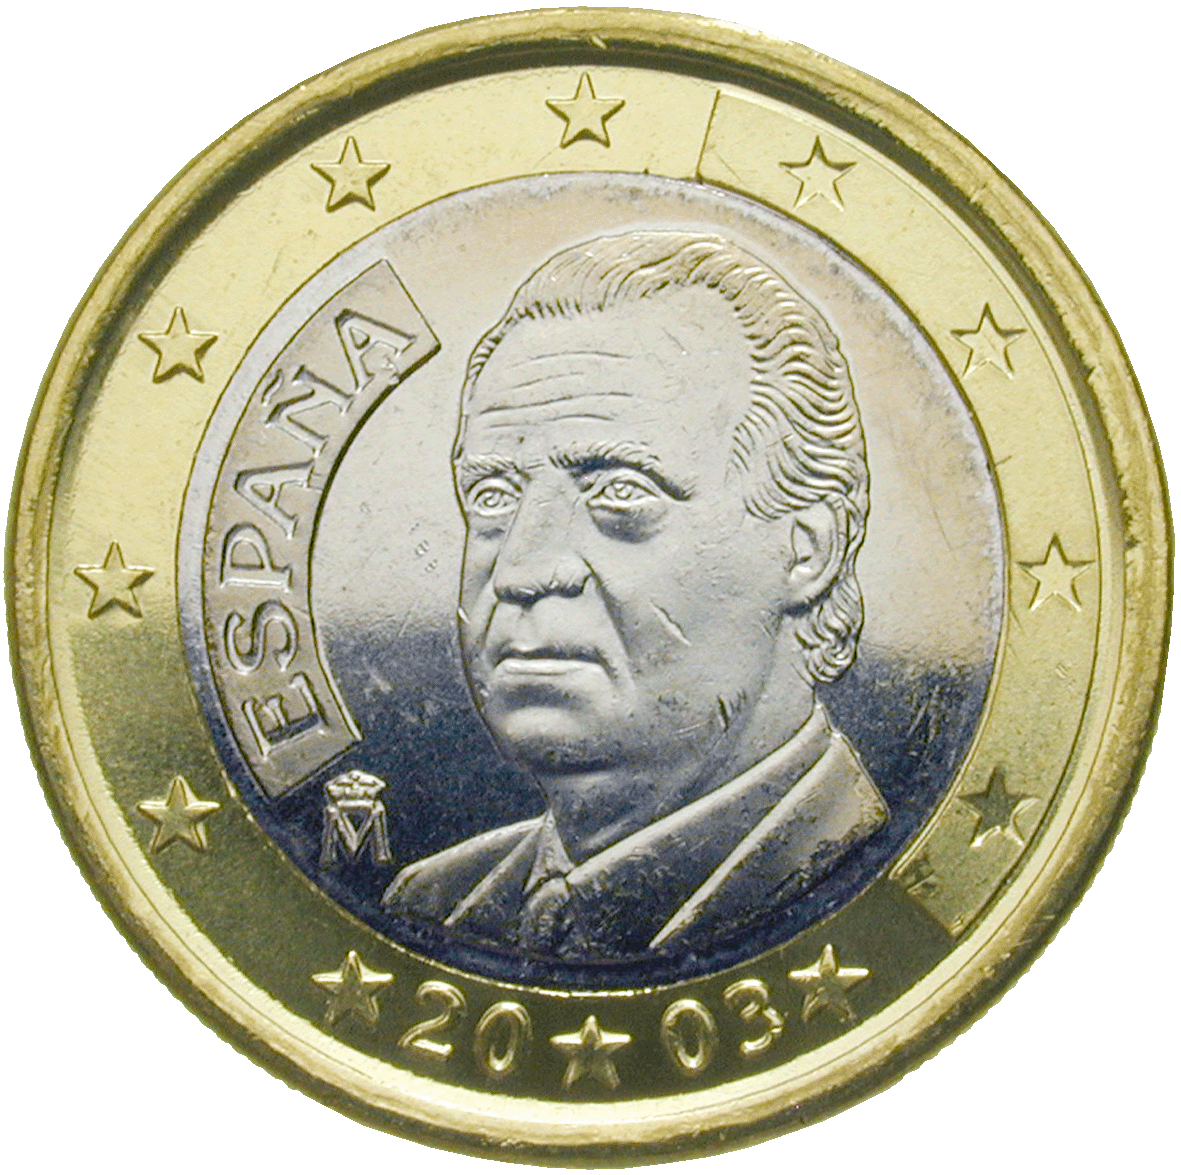 Kingdom of Spain, Juan Carlos, 1 Euro 2003 (obverse)